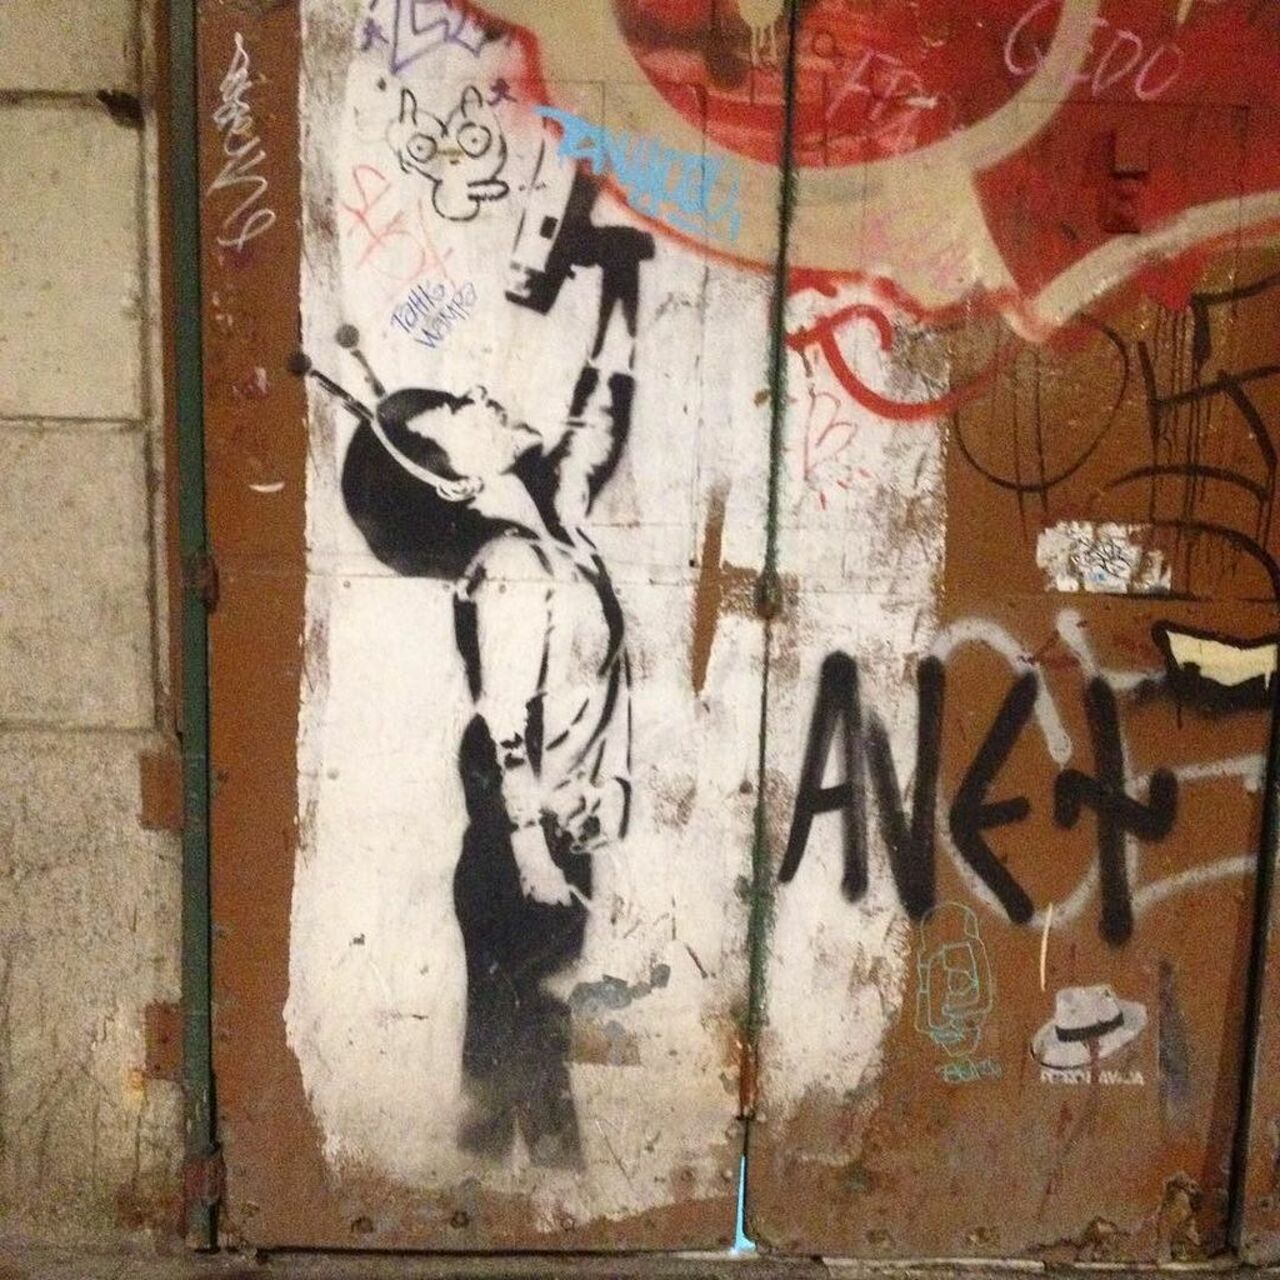 #ravalbarcelona #ravalbcn #raval #BCN #barcelona #streetart #streetpeople #streetartbcn #graffiti #stencil https://t.co/hDvCaFCxU7